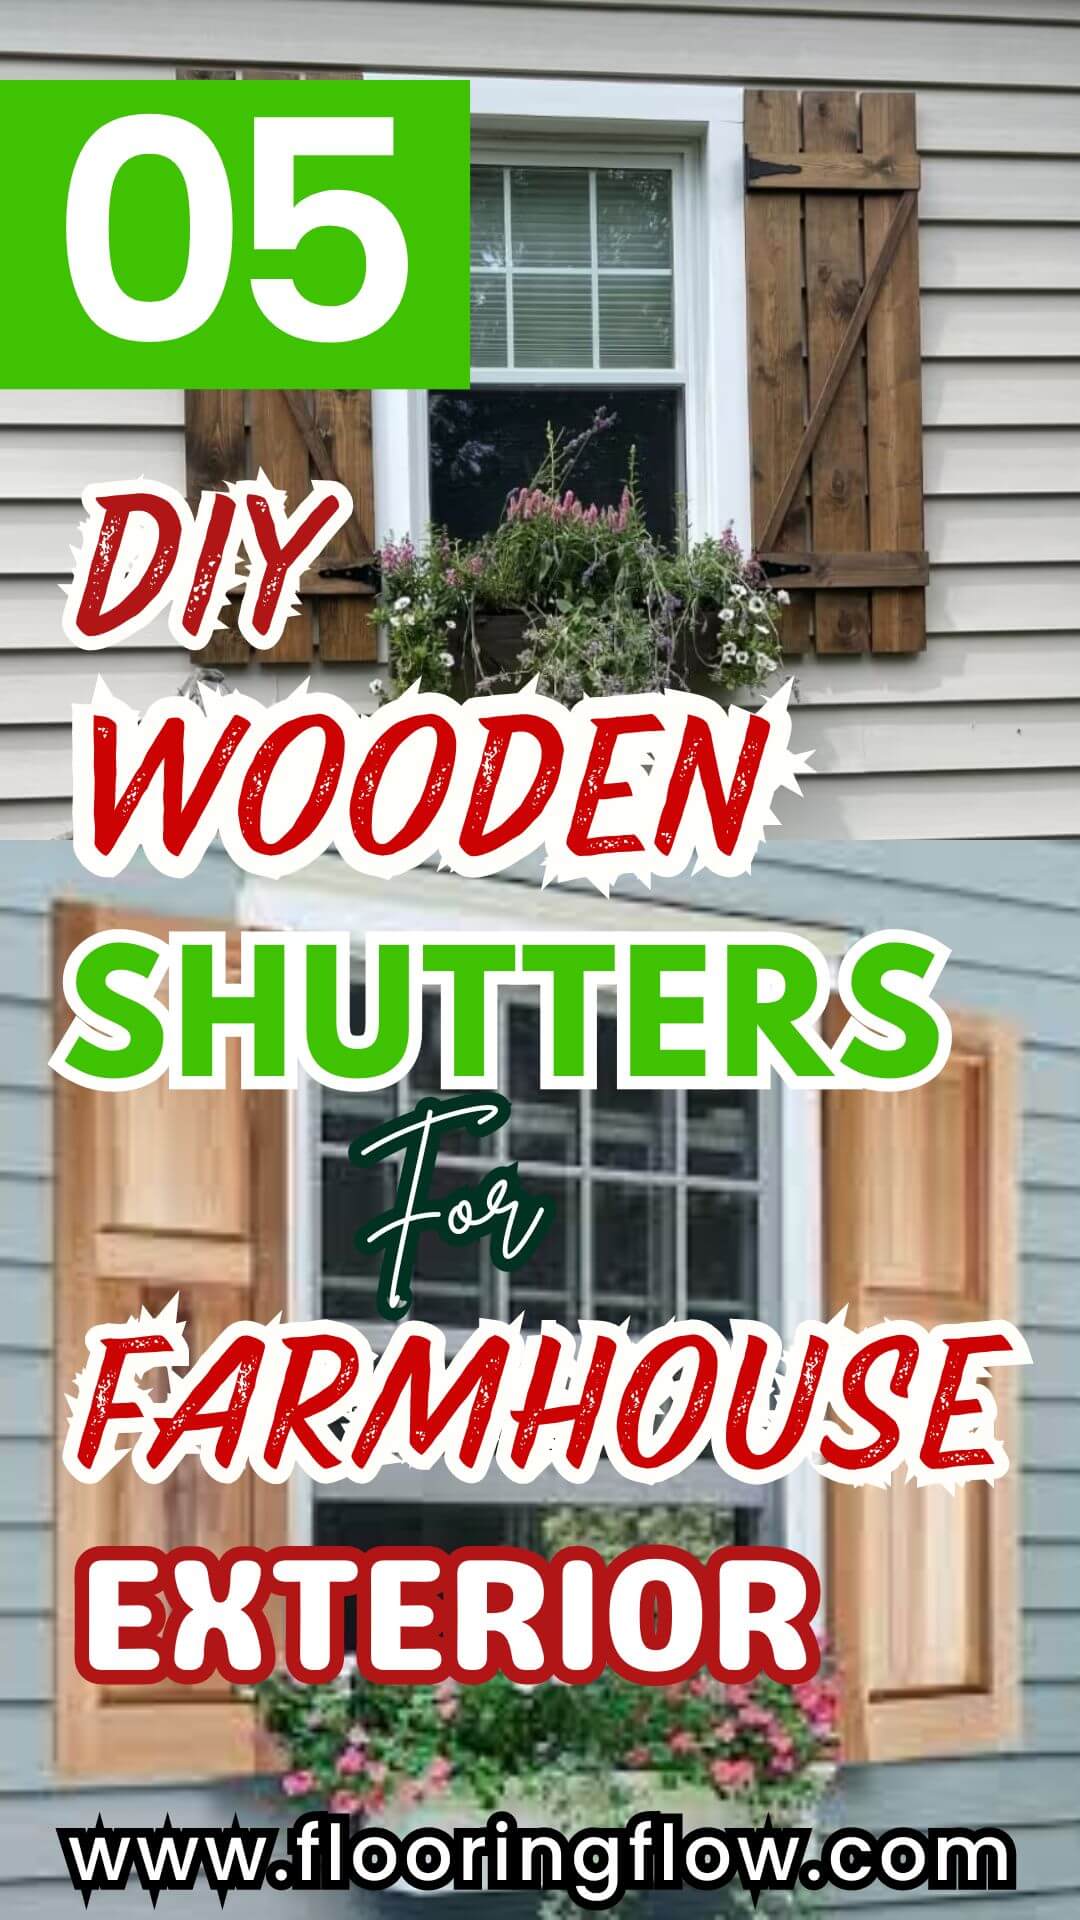 DIY Wooden Shutters for Exterior Farmhouse